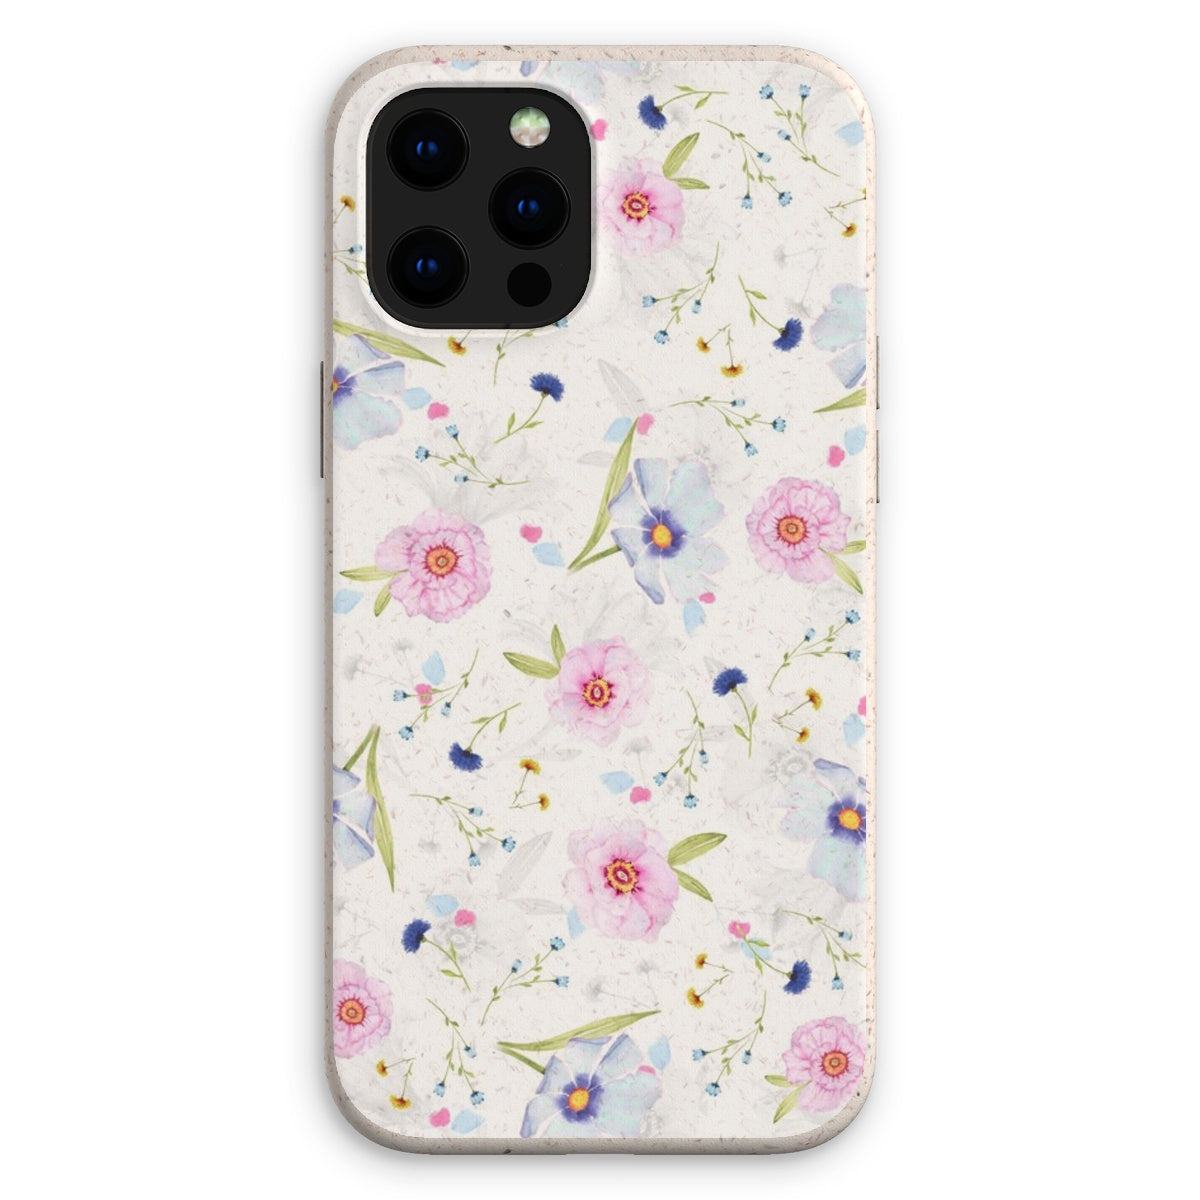 FlowerBG Eco Phone Case